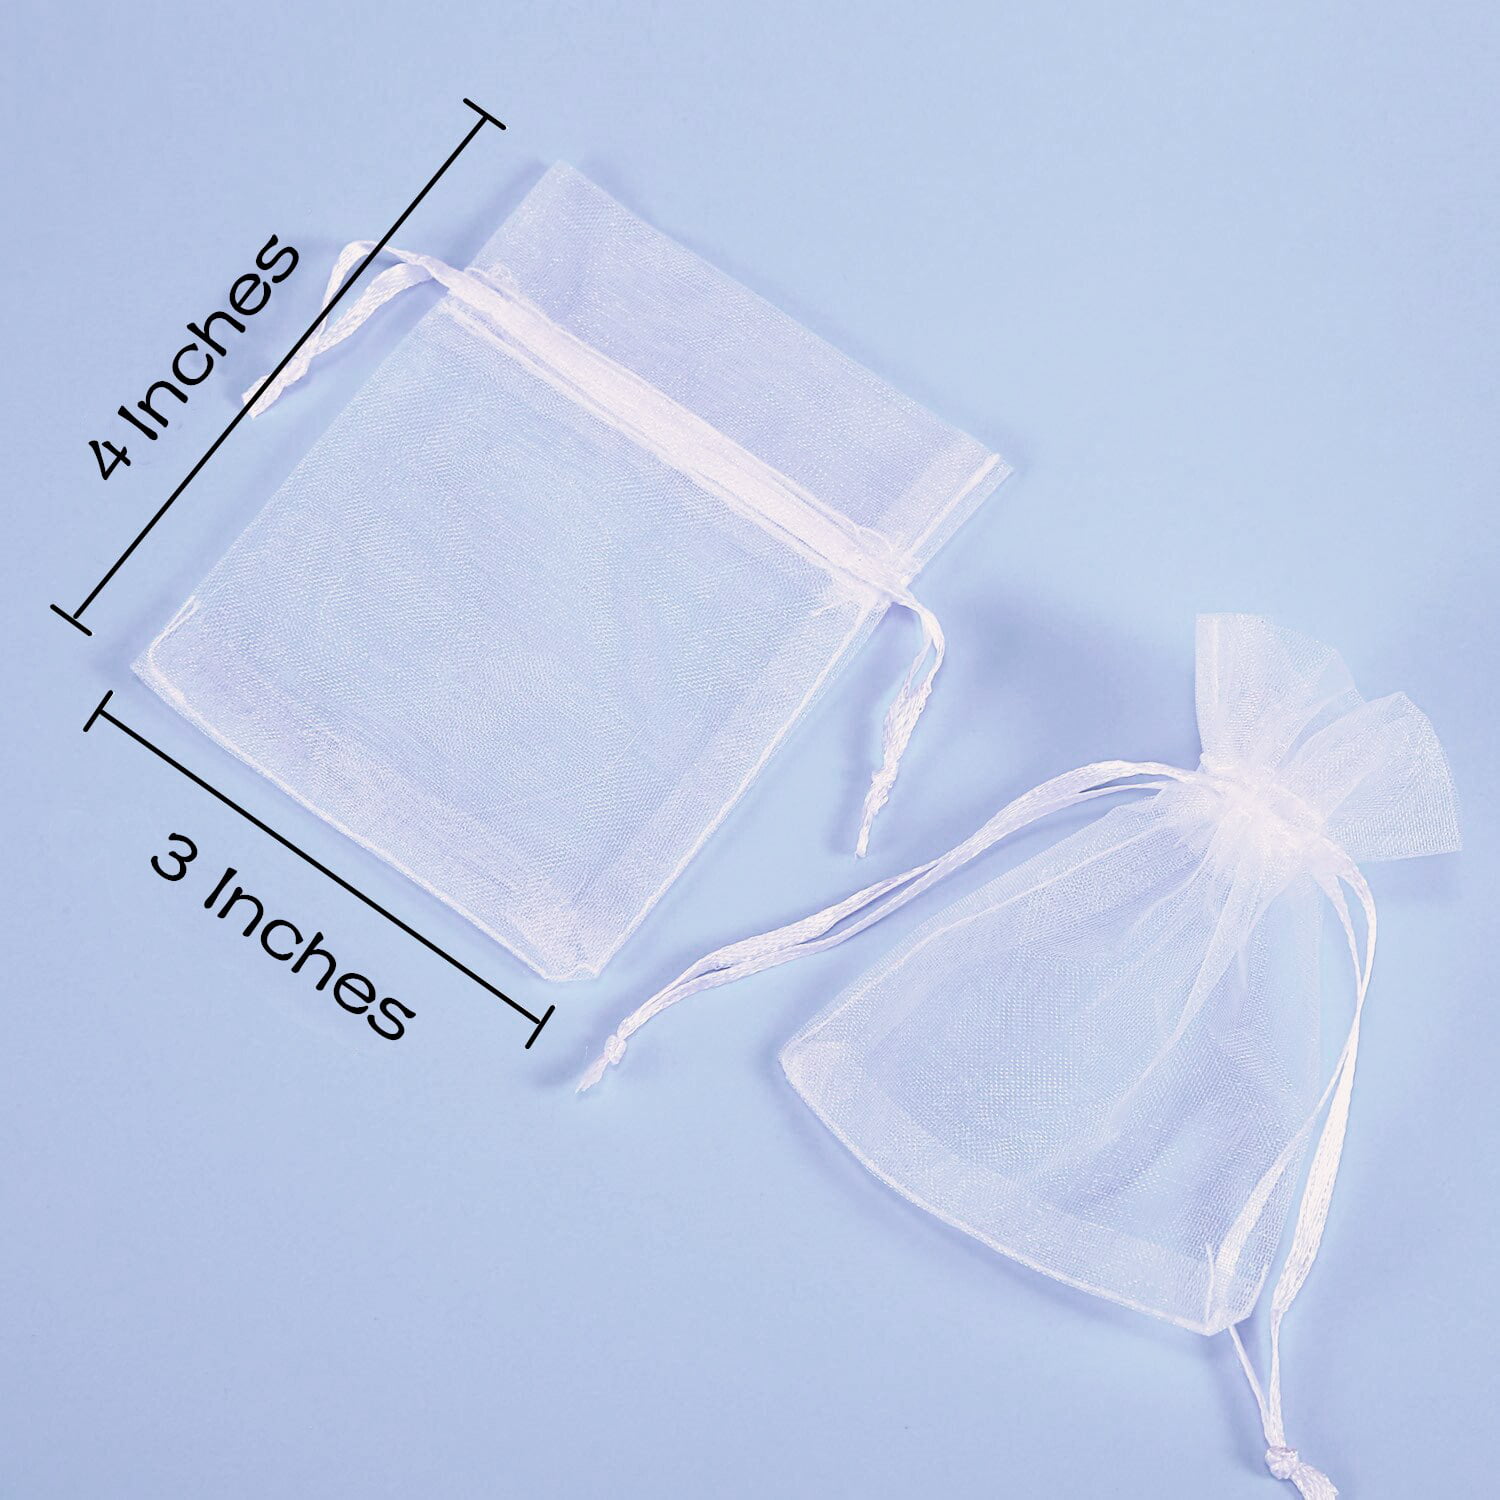 jojofuny 100pcs Organza Gift Bag Wedding Favor Bags Jewelry Bags Clear  Small Bag Small Mesh Bags Drawstring Bag with Drawstrings Drawstring Candy  Bag